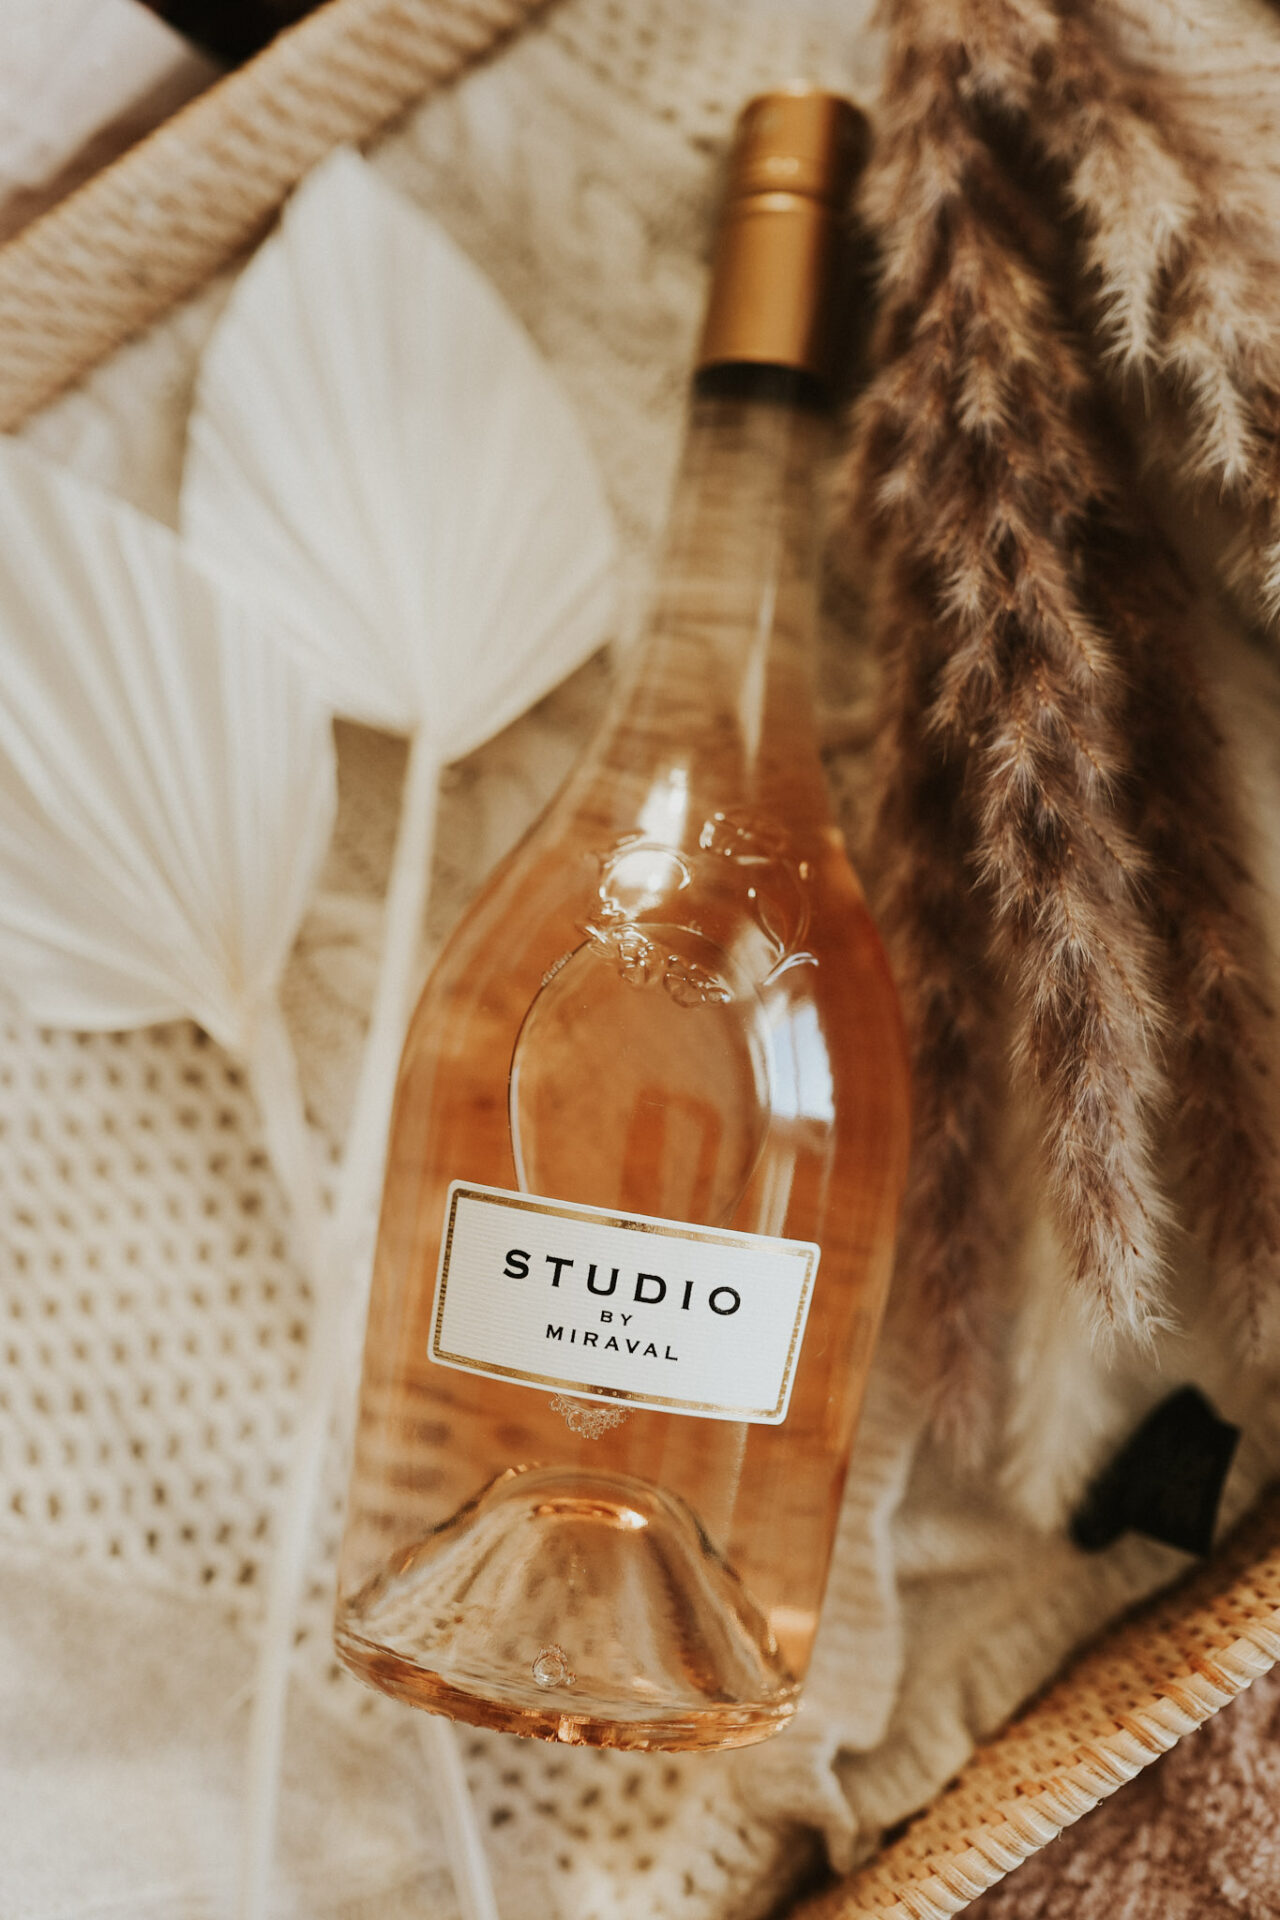 Studio by Miraval Rose bottle